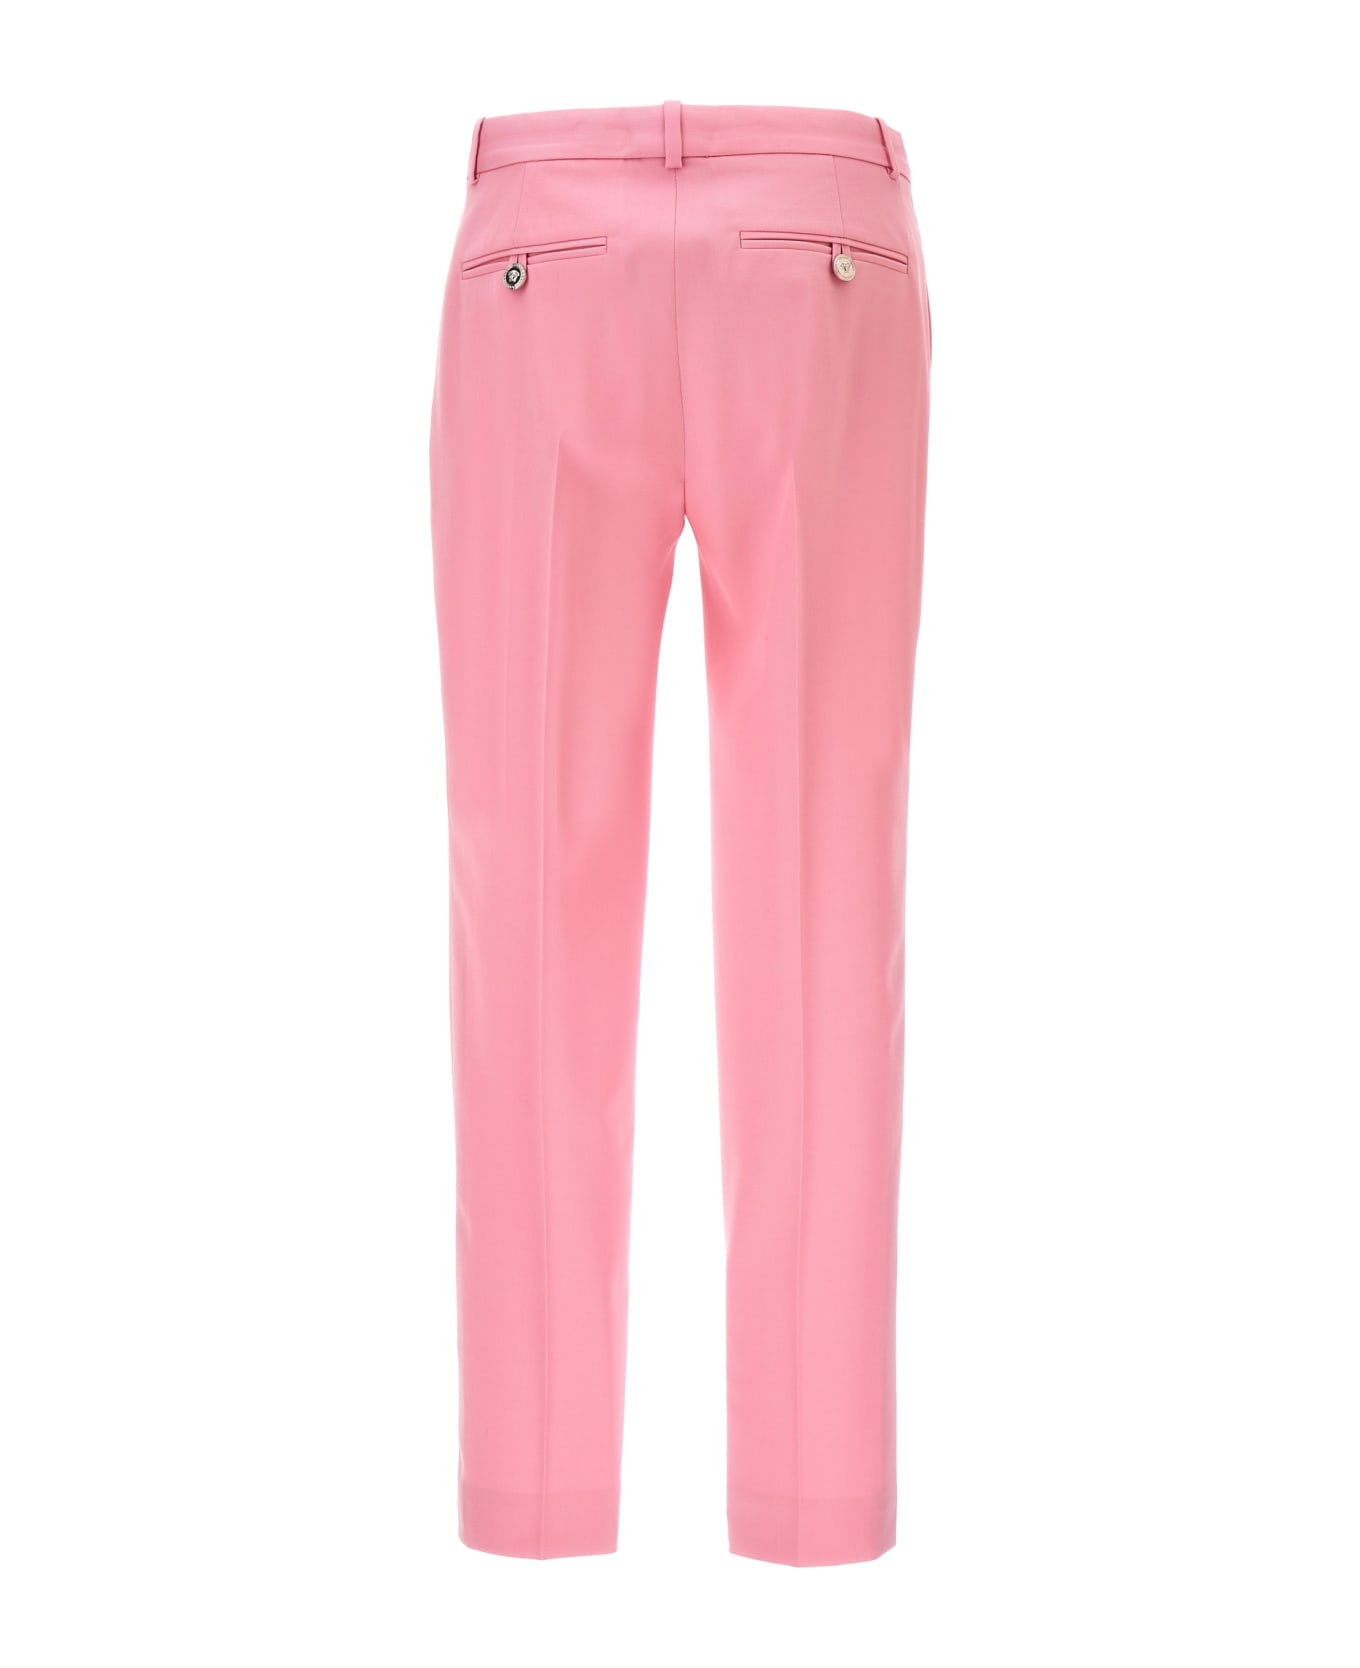 Versace Classic Pants - Pink